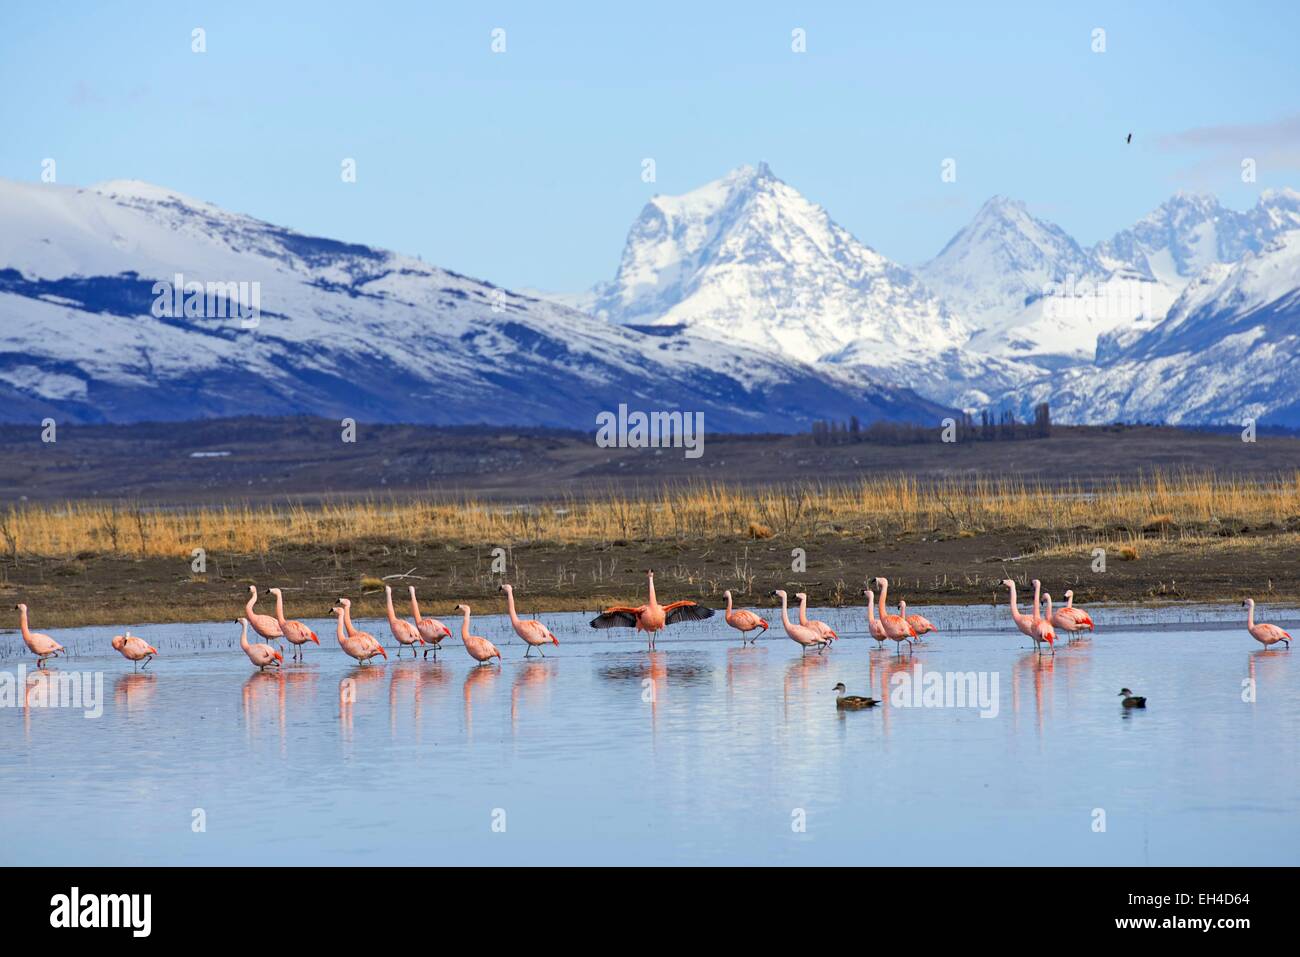 Argentina, Patagonia, Santa Cruz, El Calafate, pink flamingo and gooses on lago argentino Stock Photo